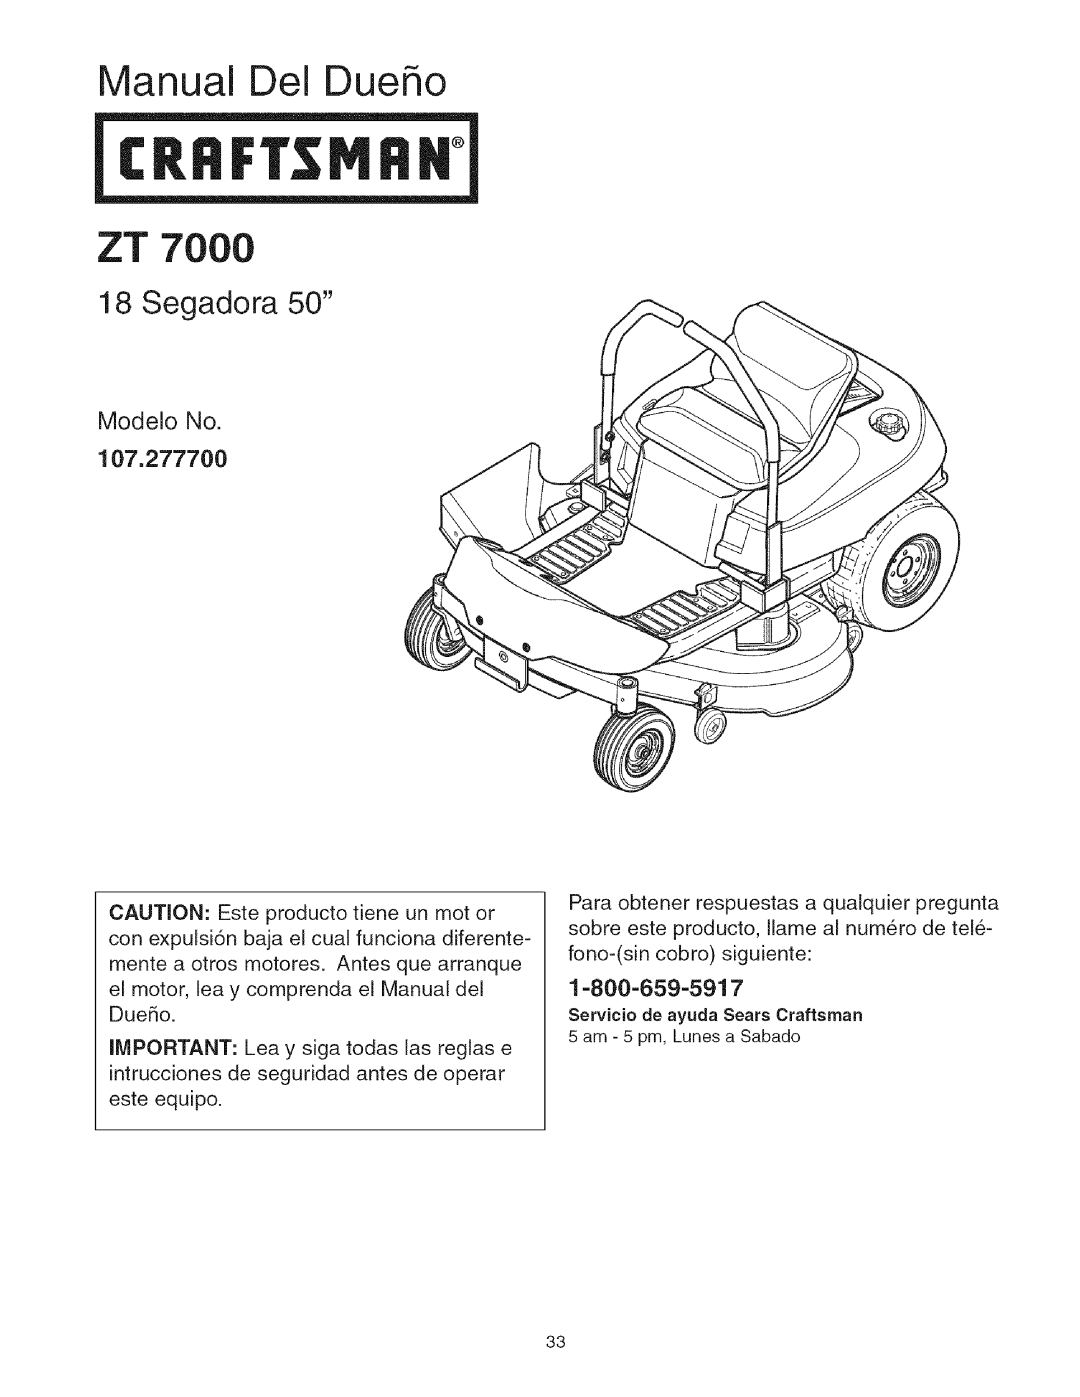 Craftsman manual Manual Del Dueho, Segadora, Modelo No 107.277700, ZT 7OOO 